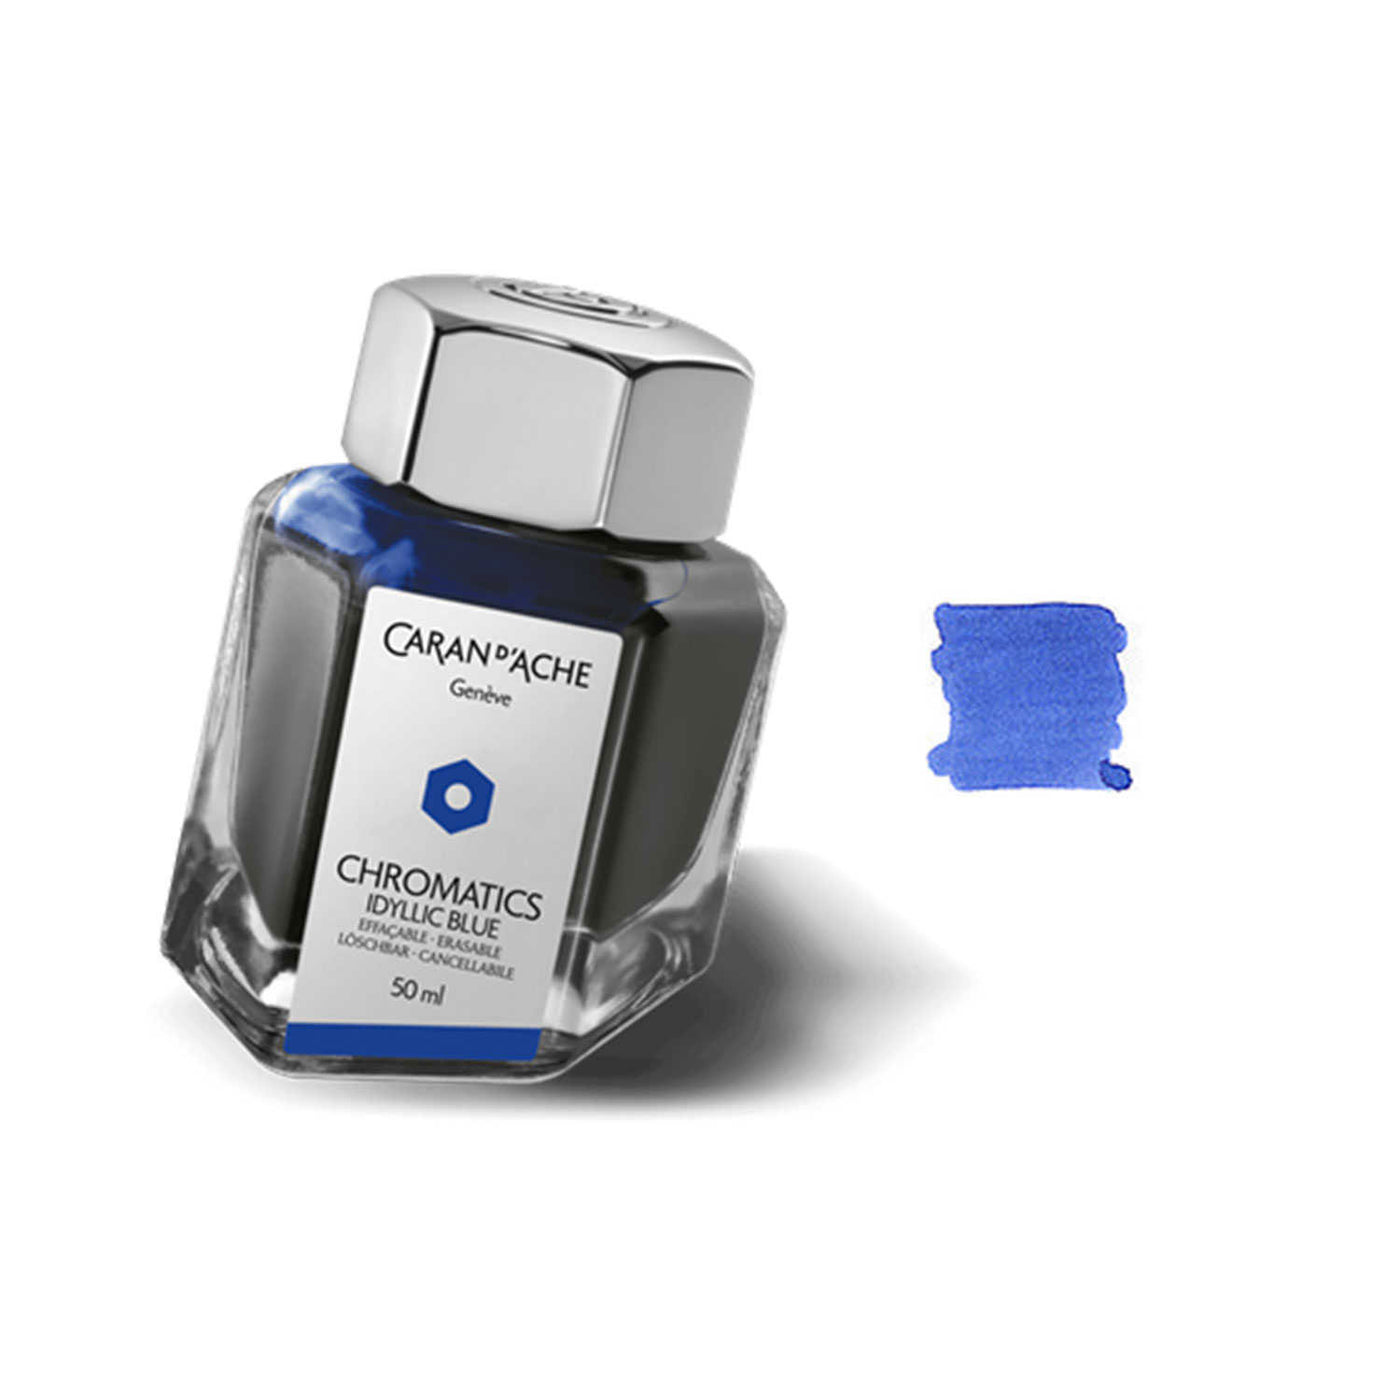 Caran d' Ache Chromatics Ink Bottle, Idyllic Blue - 50ml